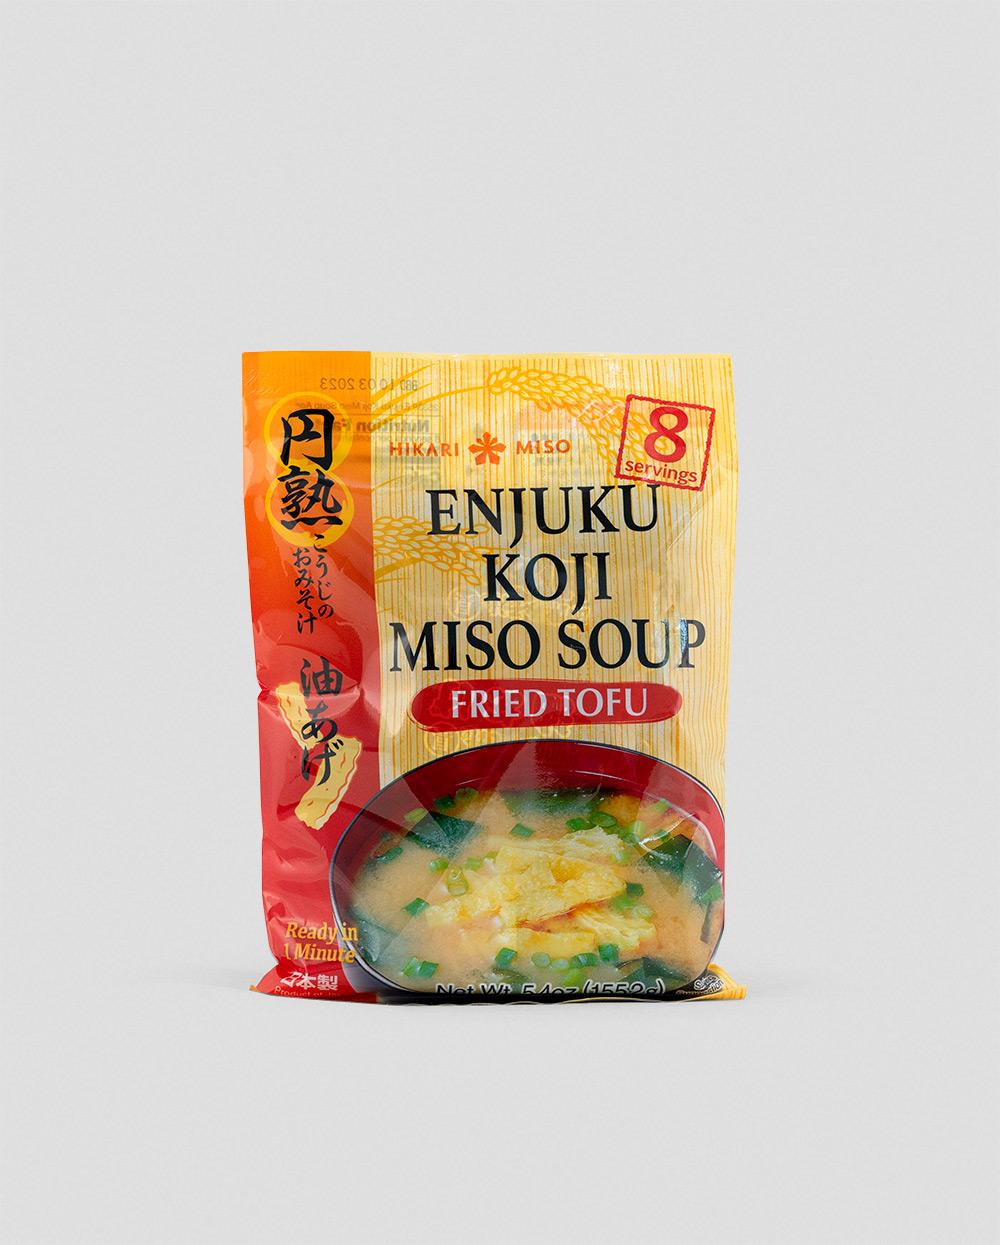 Hikari Enjuku Koji Miso Soup Fried Tofu 155g